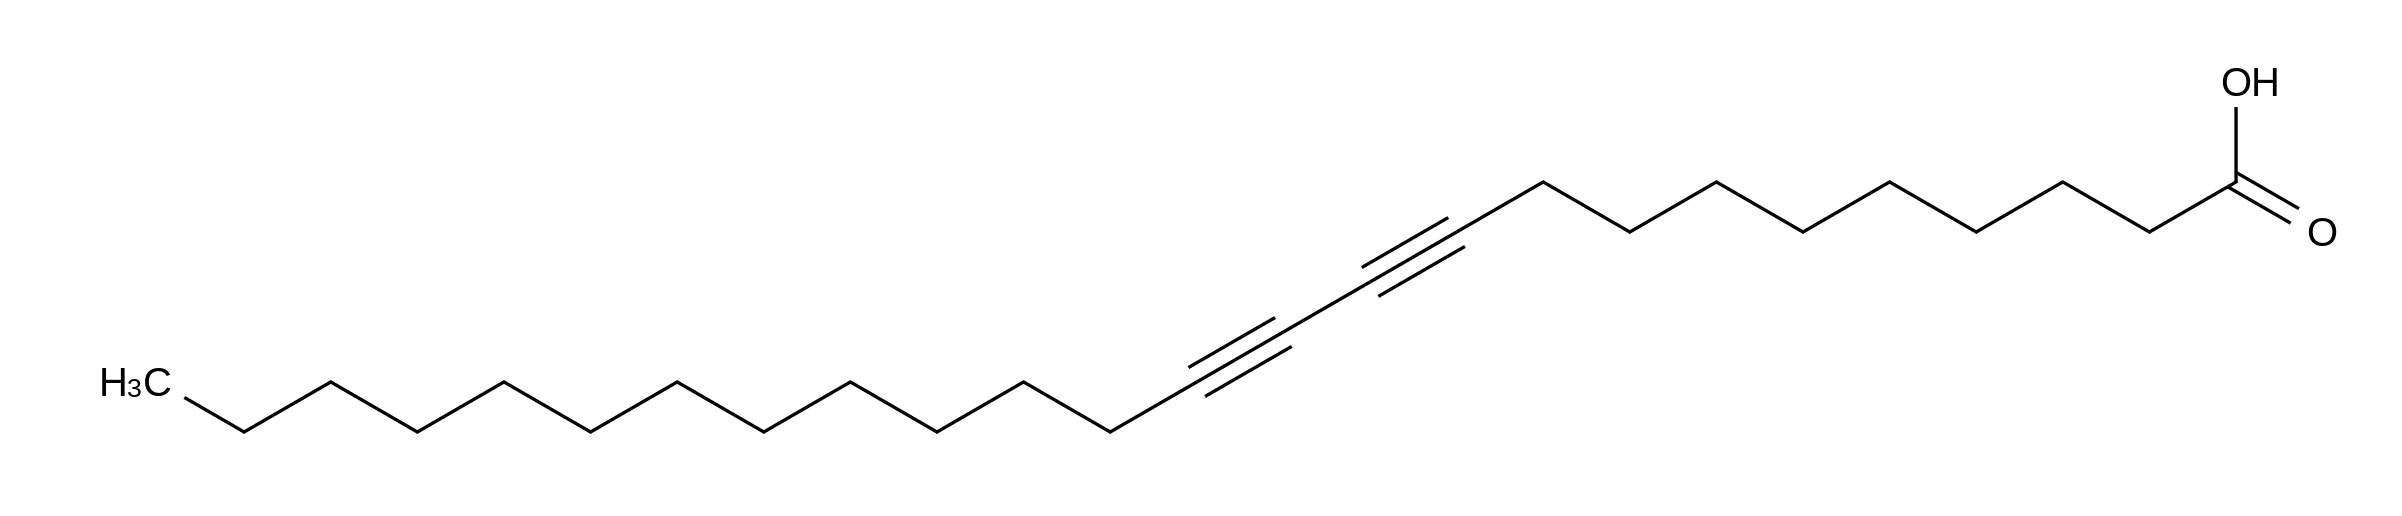 10,12-Pentacosadiynoic Acid